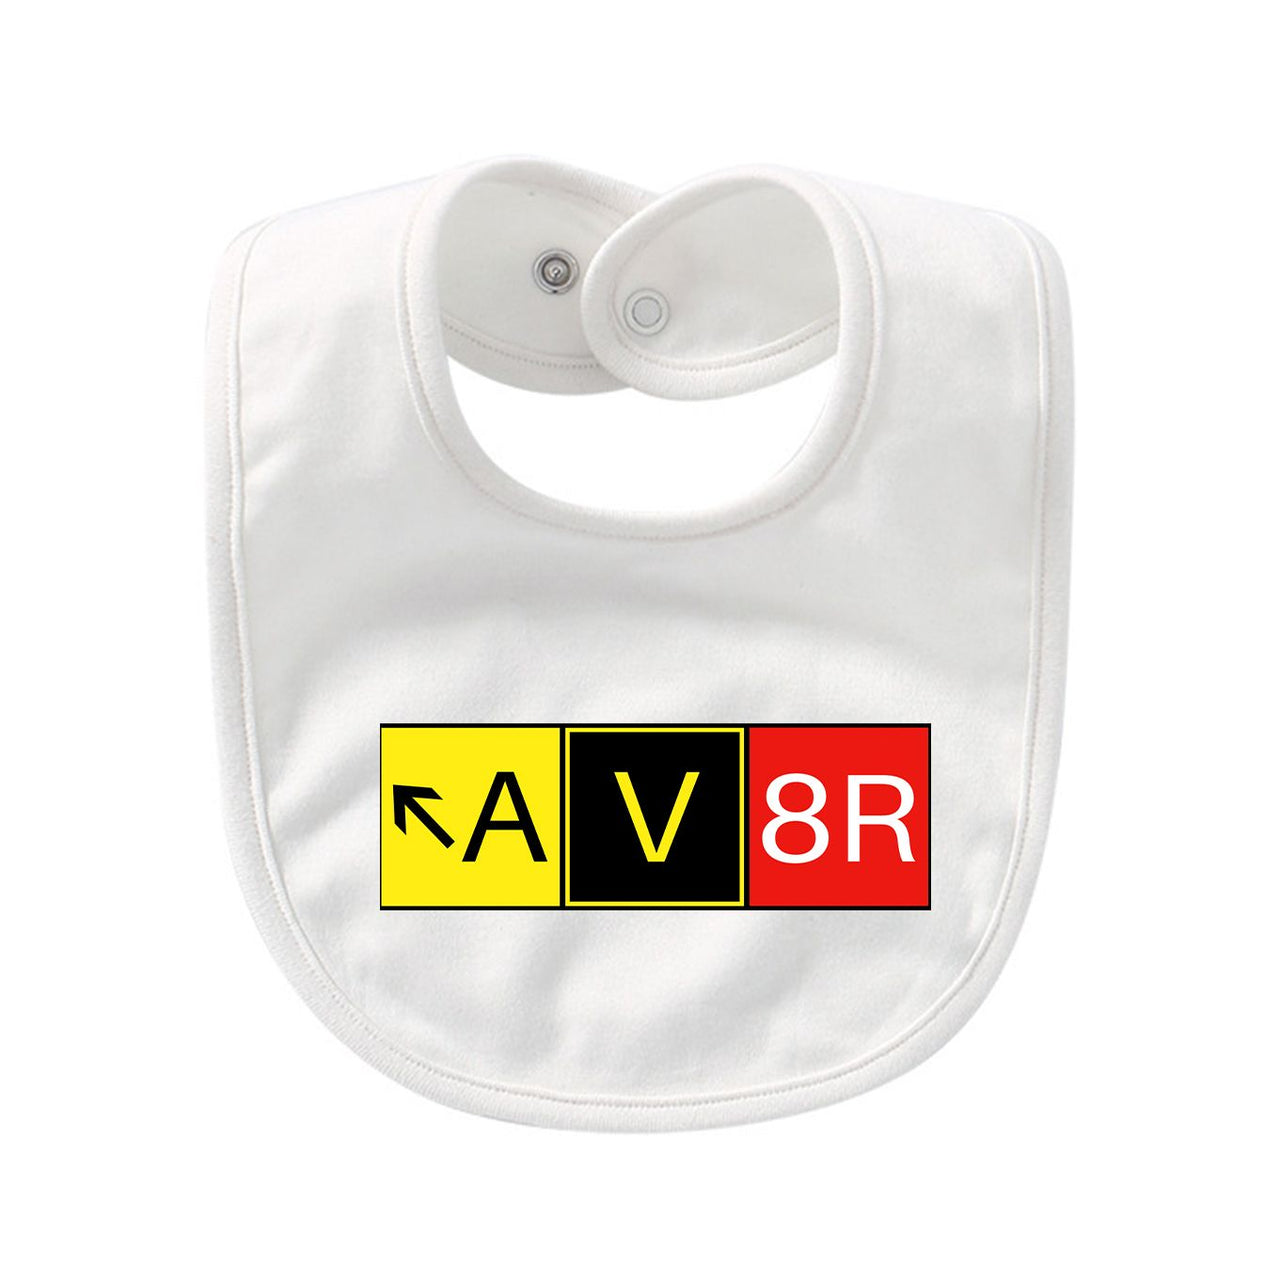 AV8R Designed Baby Saliva & Feeding Towels